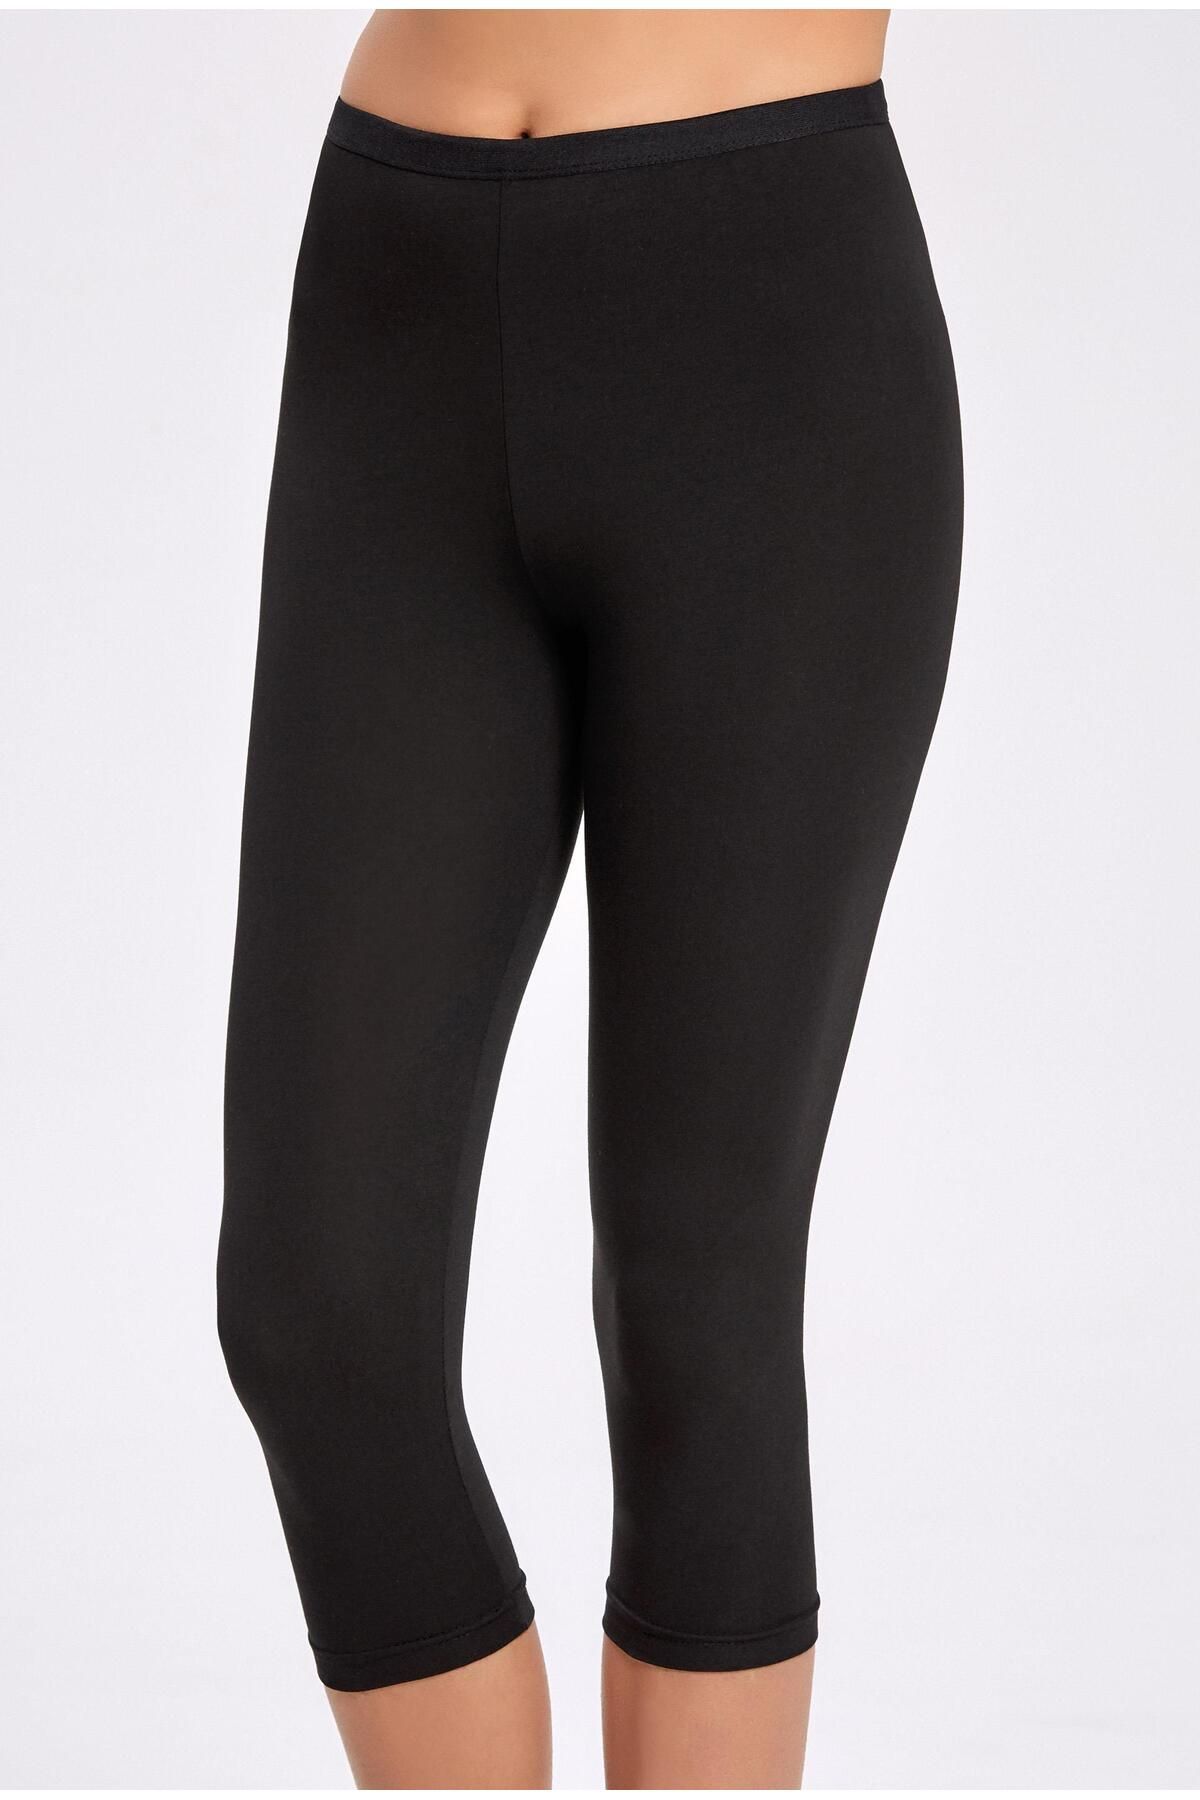 Arma Yildiz Women S Black Combed Lycra Capri Short Tights - Trendyol